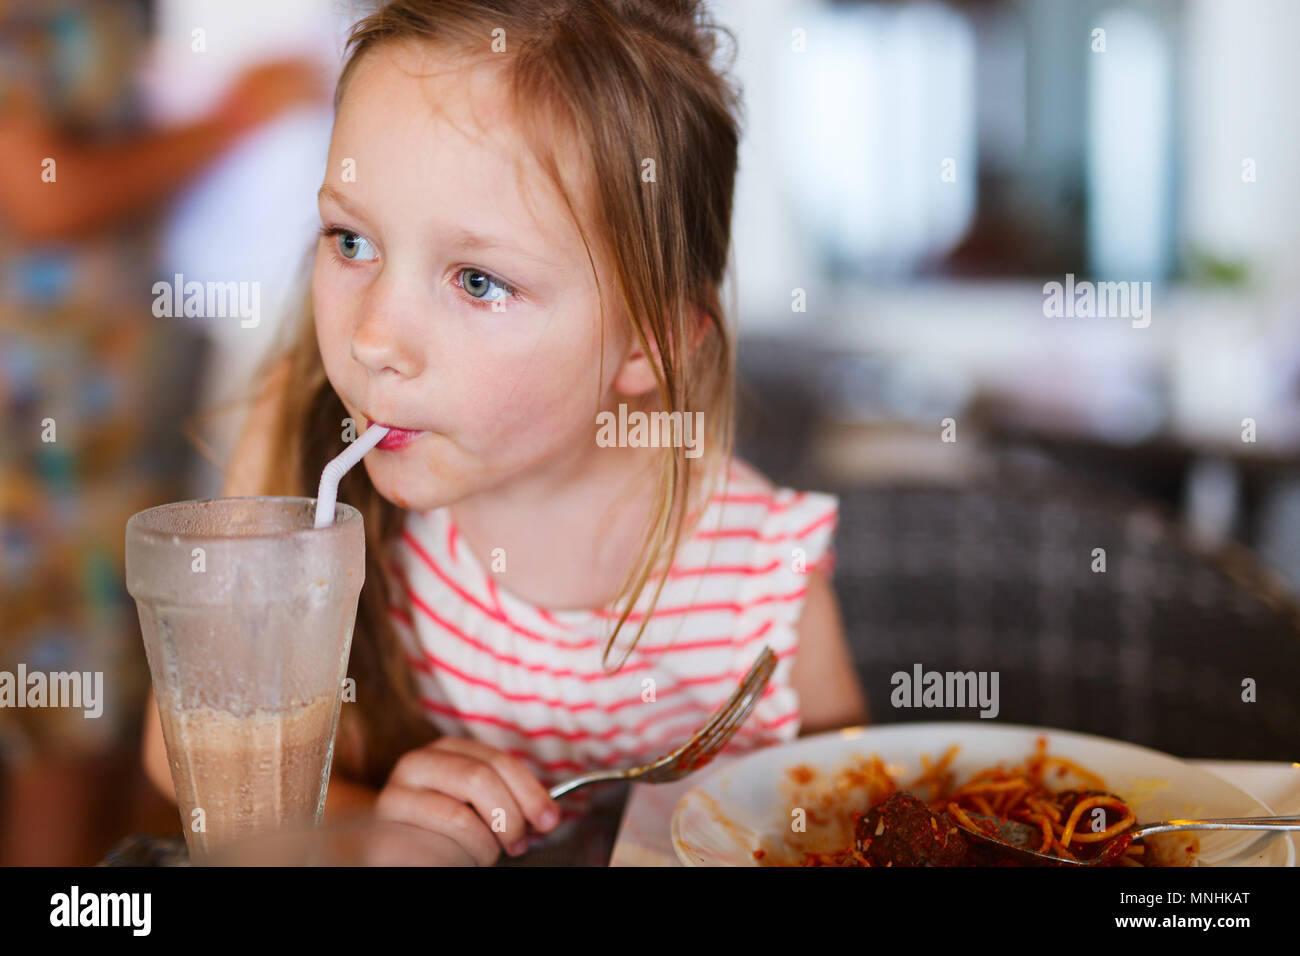 Portrait of adorable little girl having lunch at restaurant Stock Photo